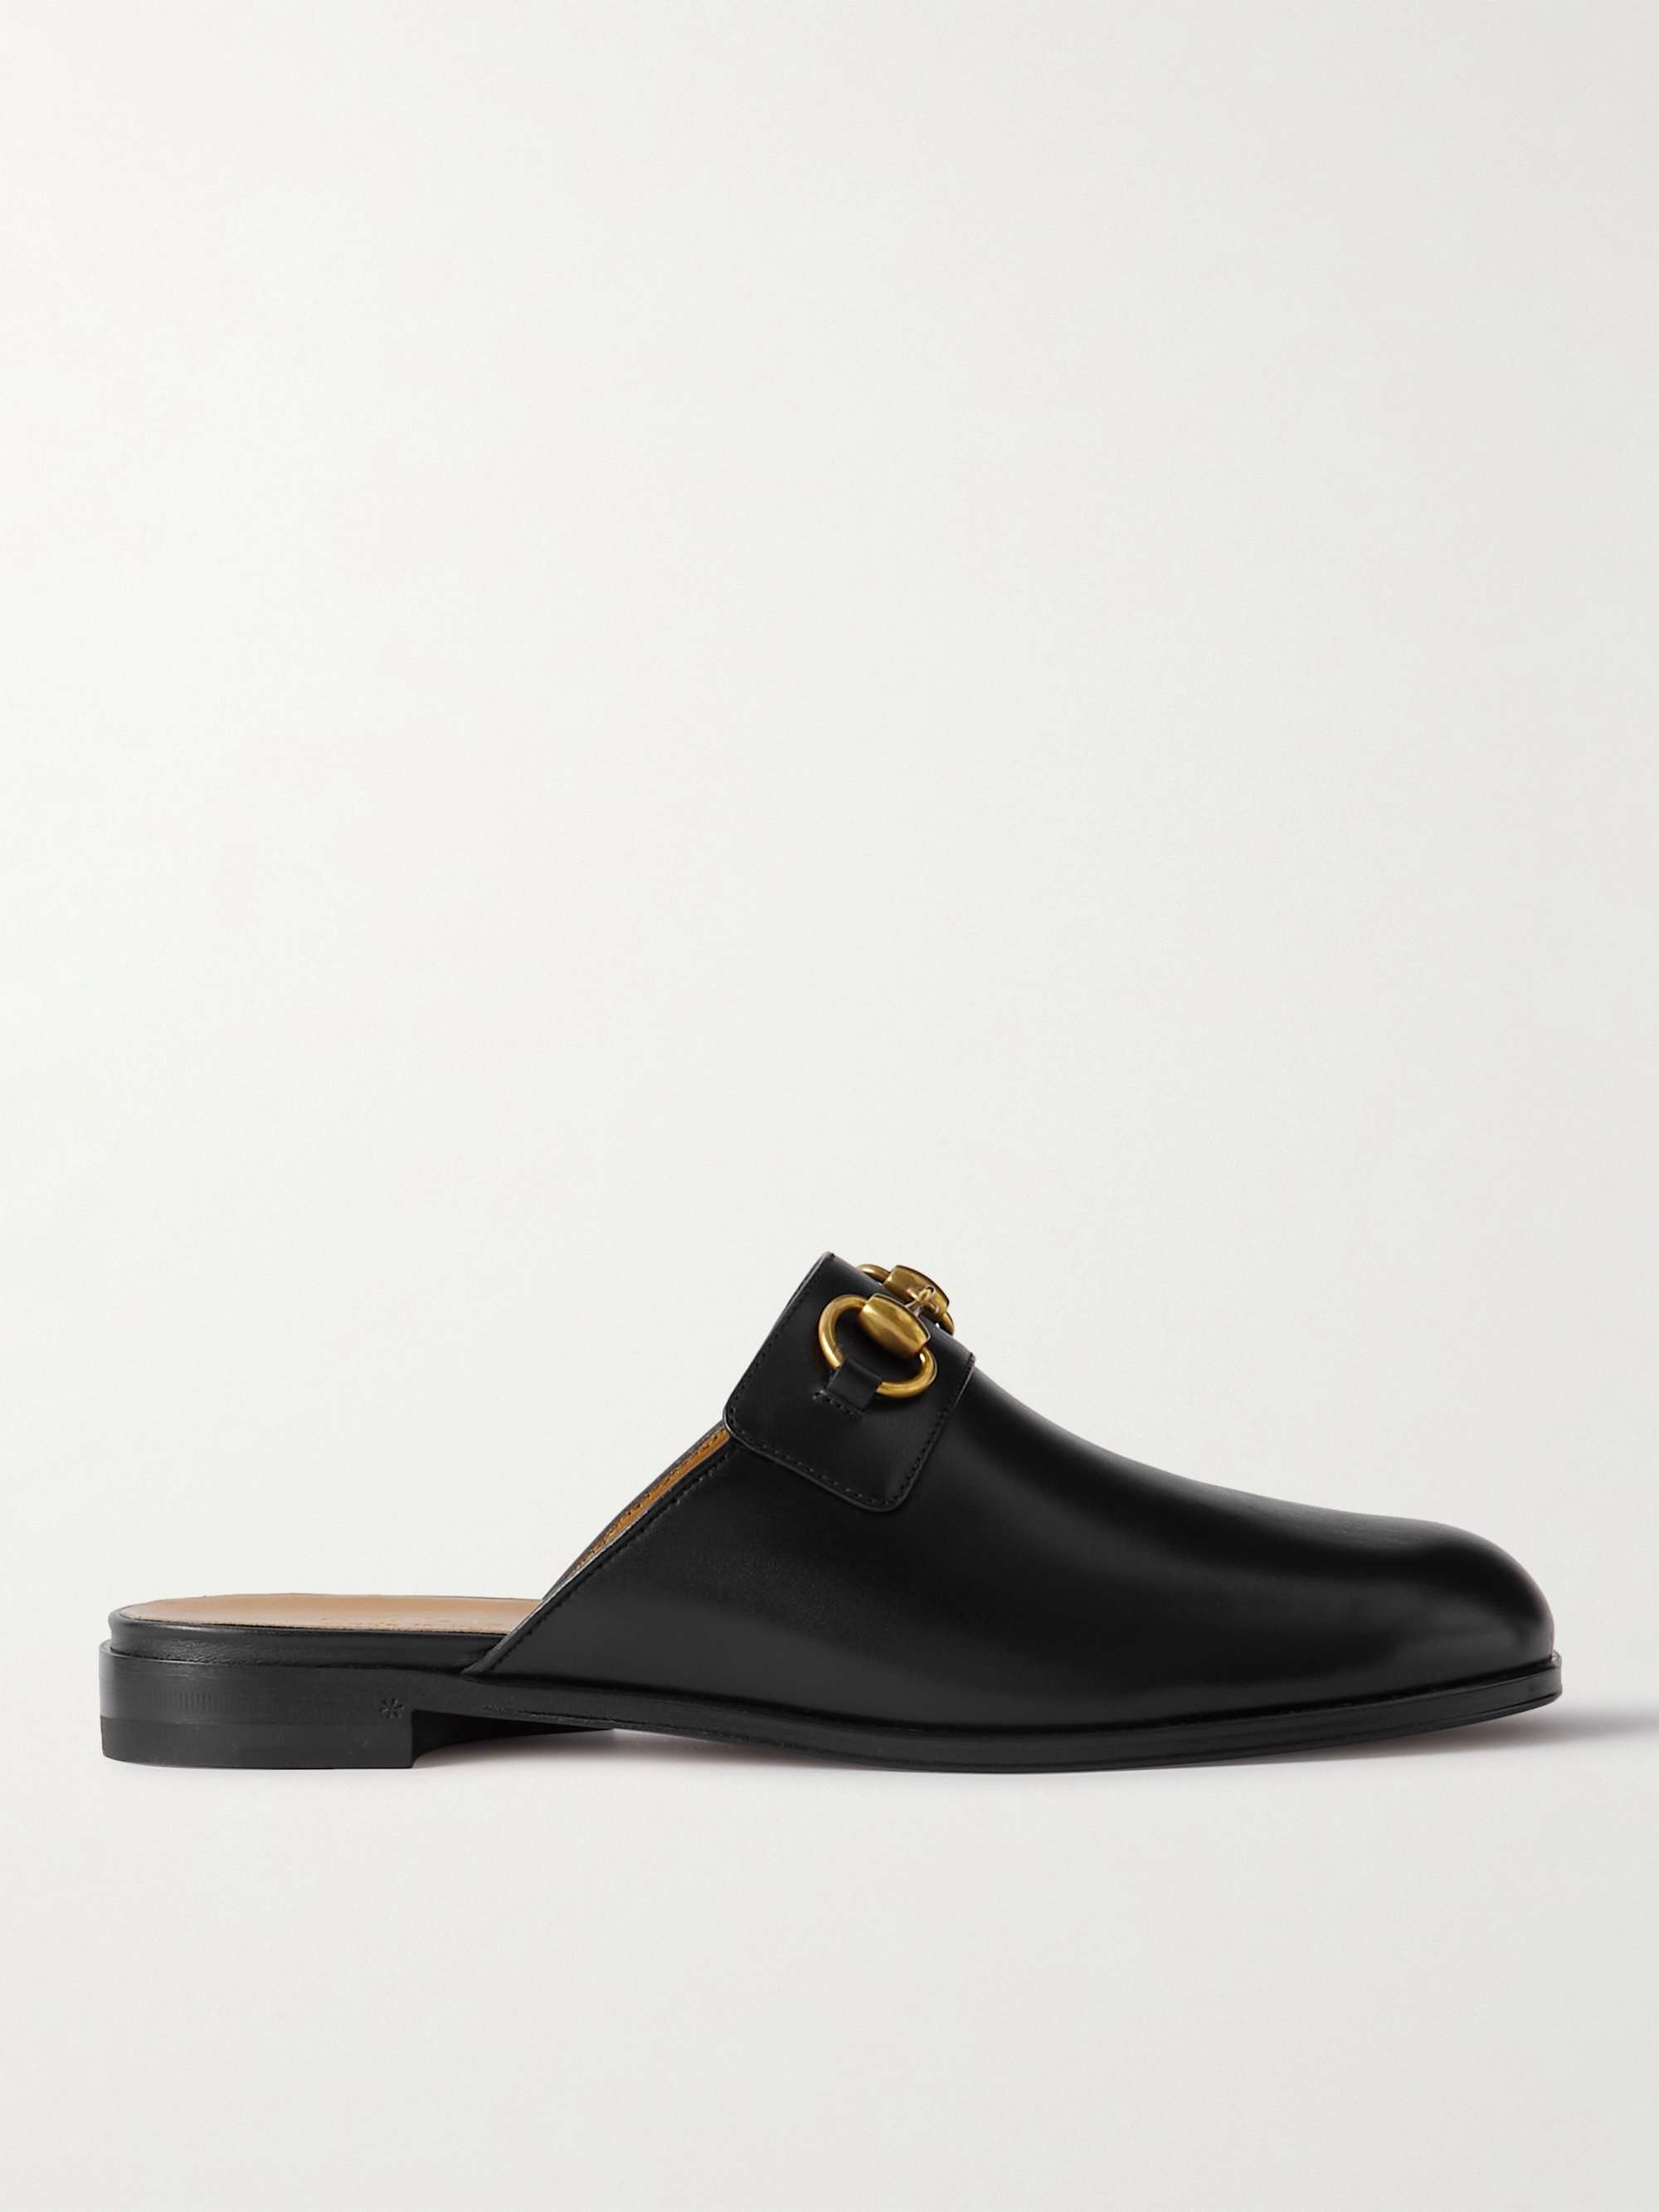 GUCCI Horsebit Leather Sandals for Men | MR PORTER